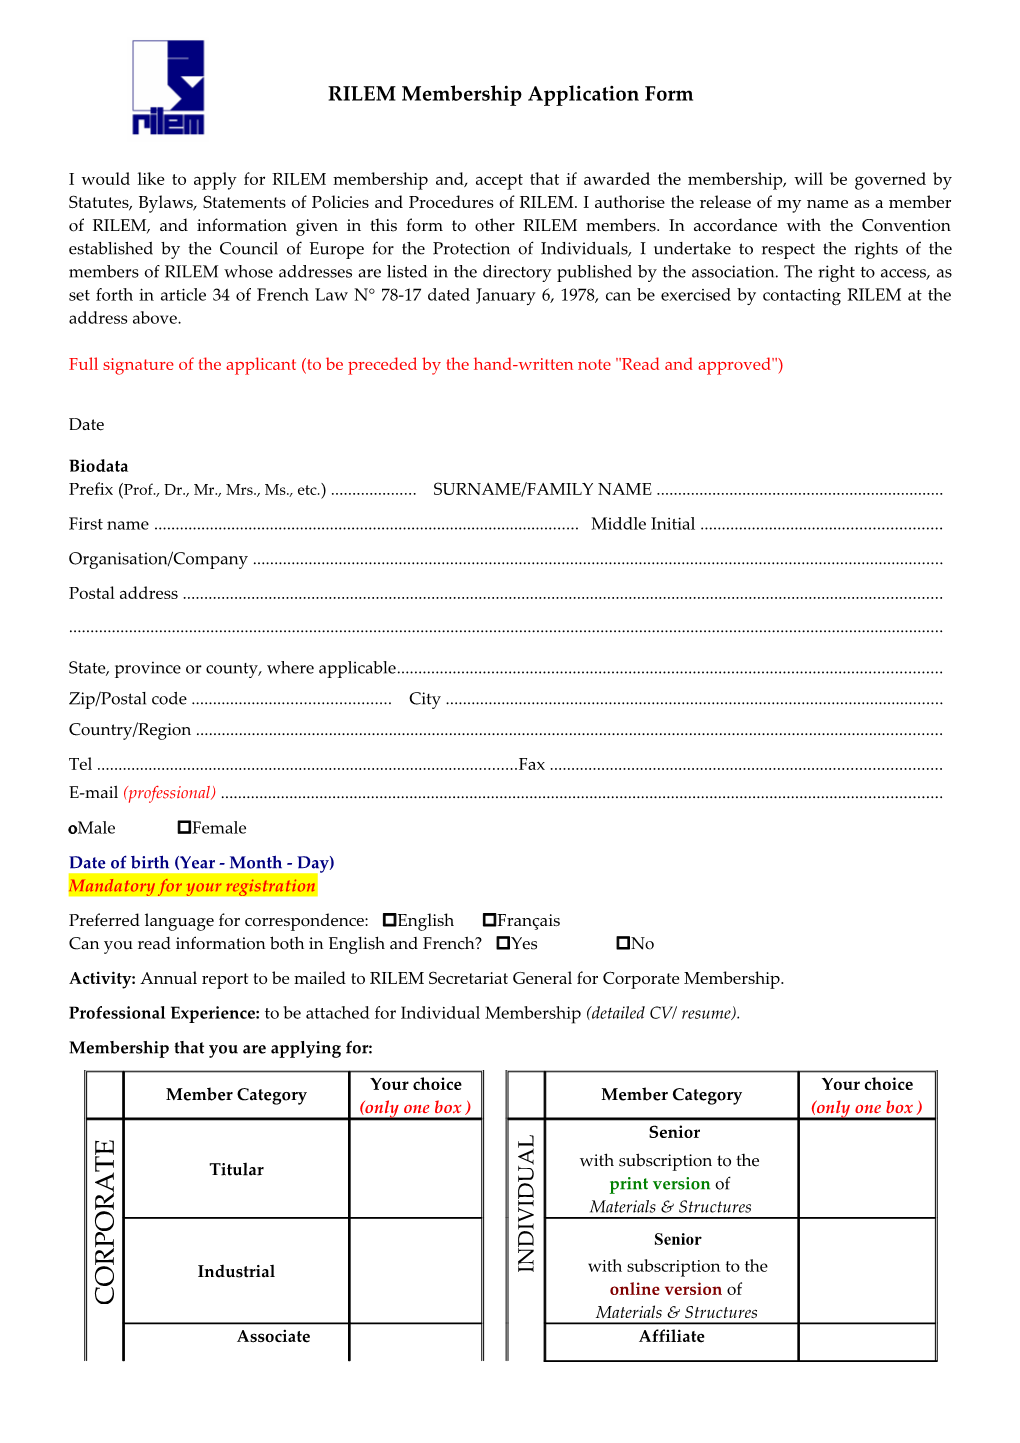 RILEM Membership: Application Form